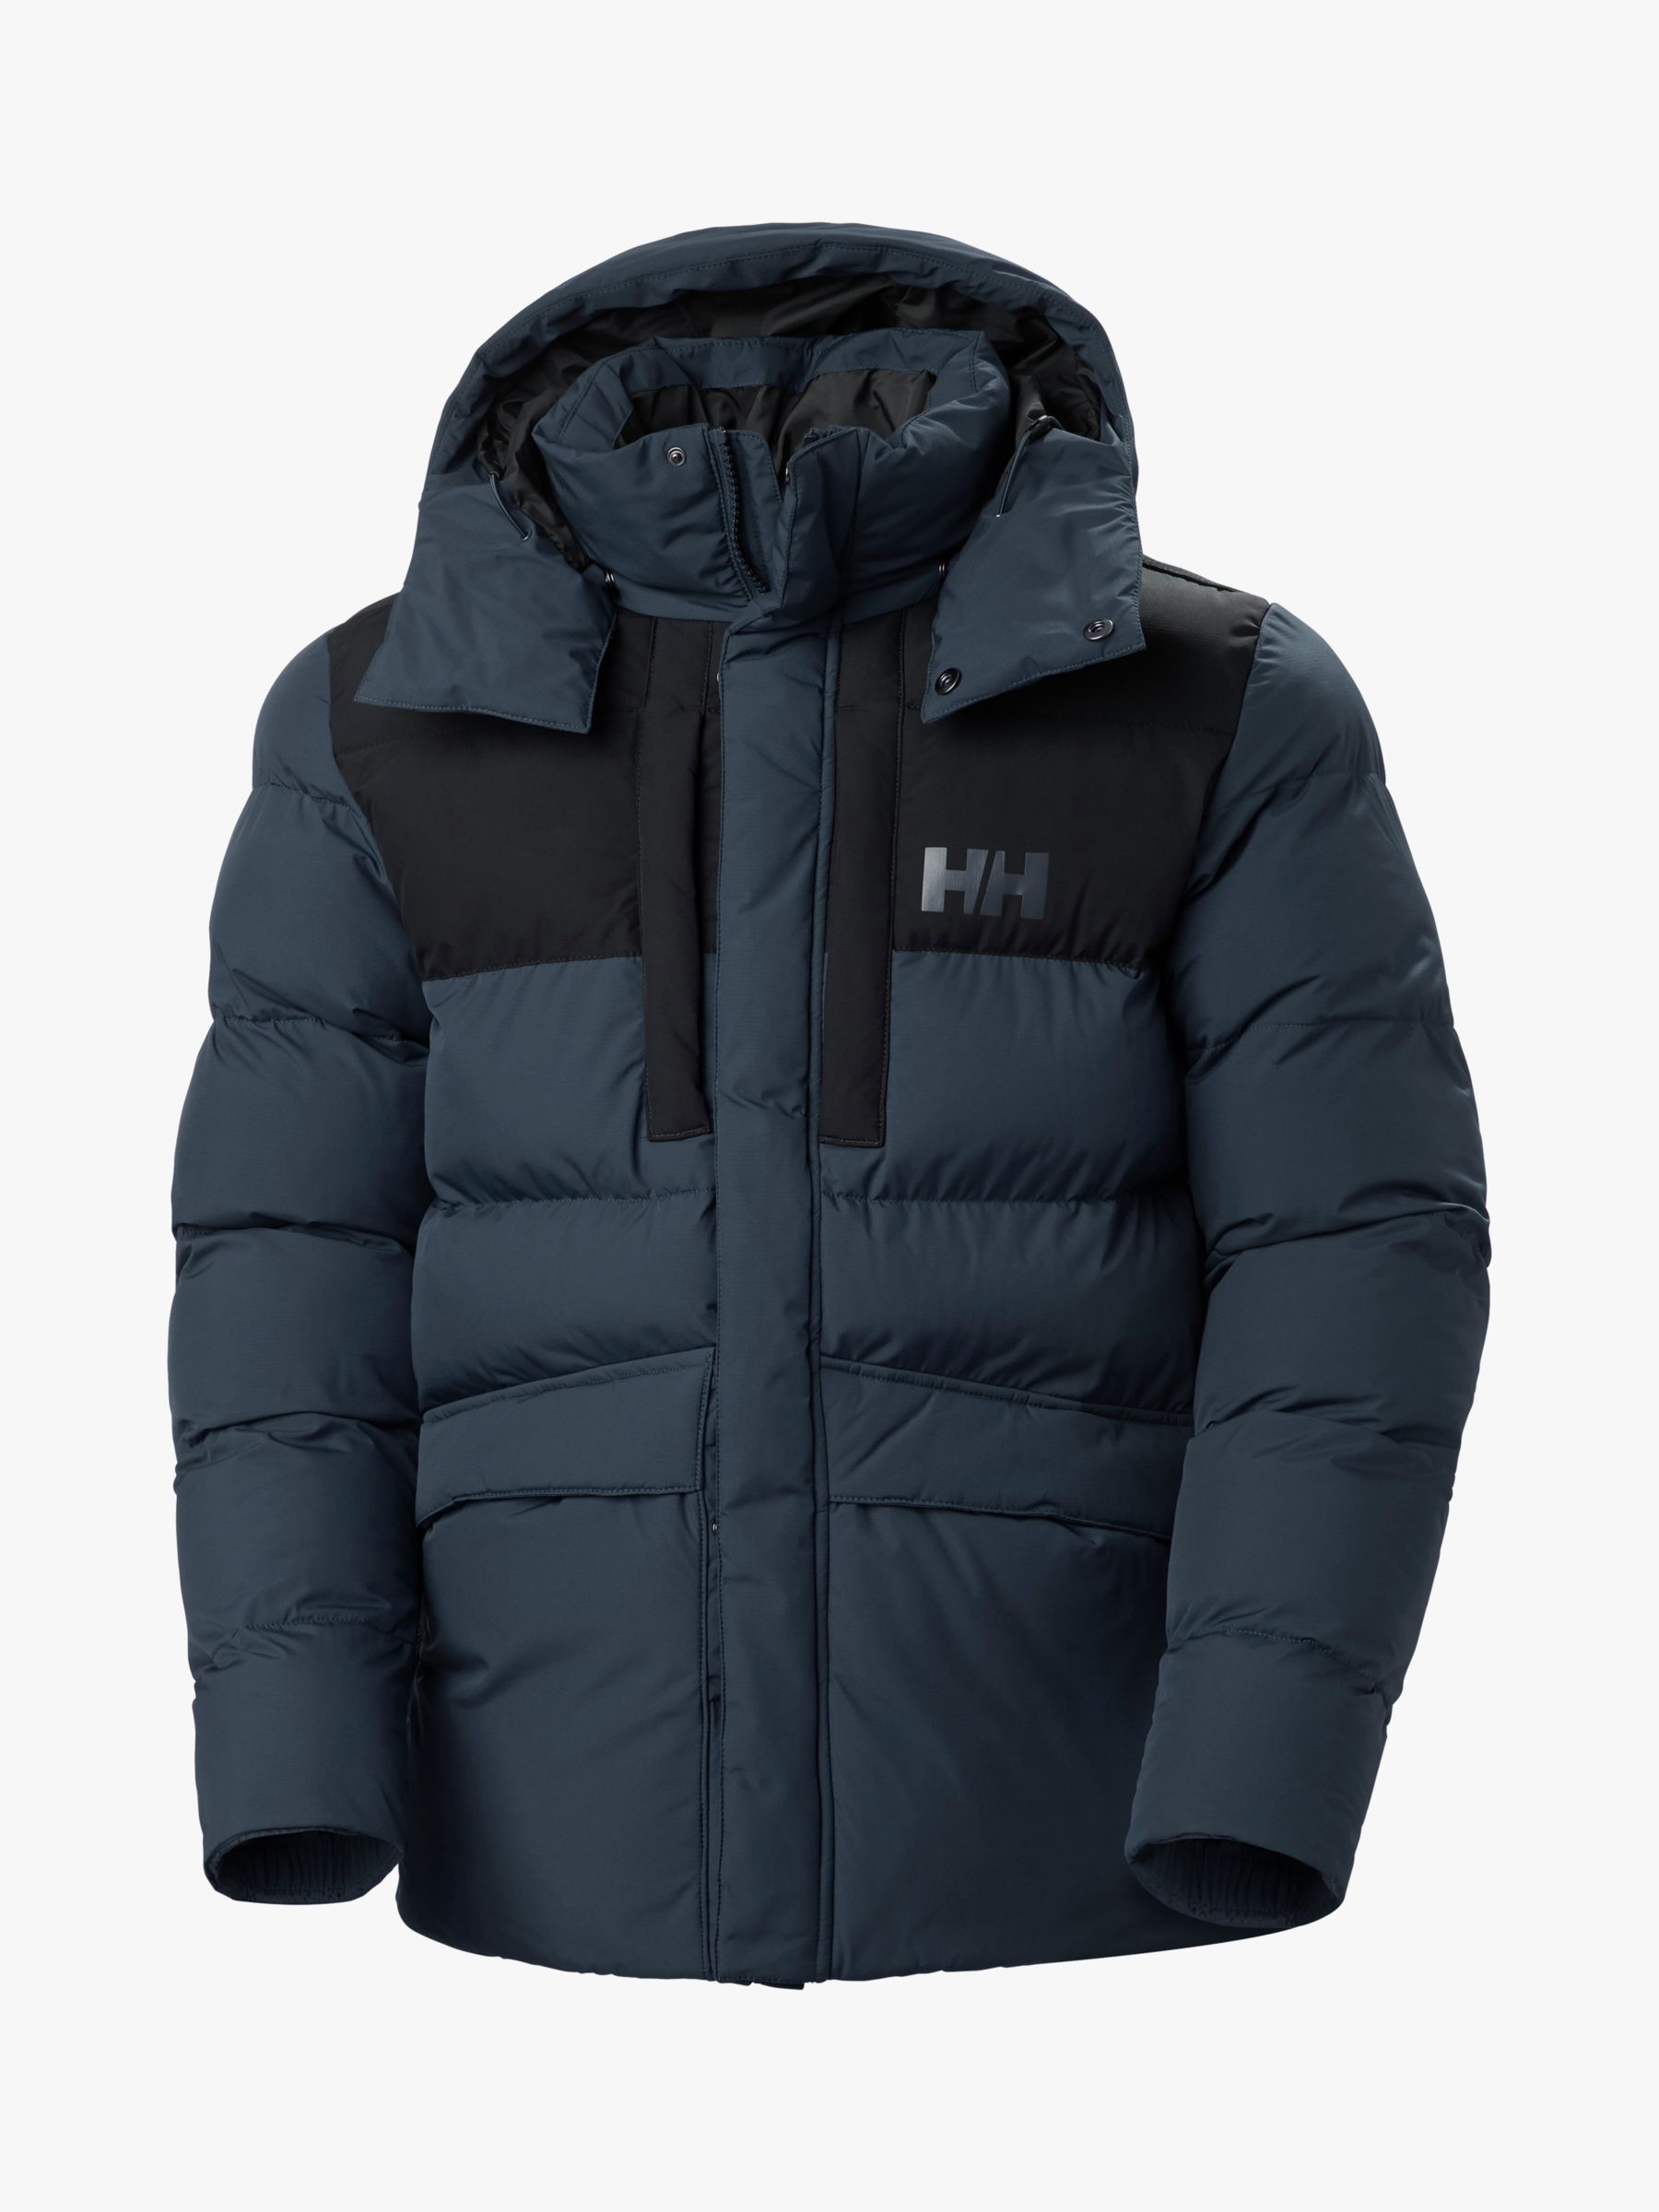 Helly Hansen Explorer Puffer Jacket, Alpine Frost at John Lewis & Partners